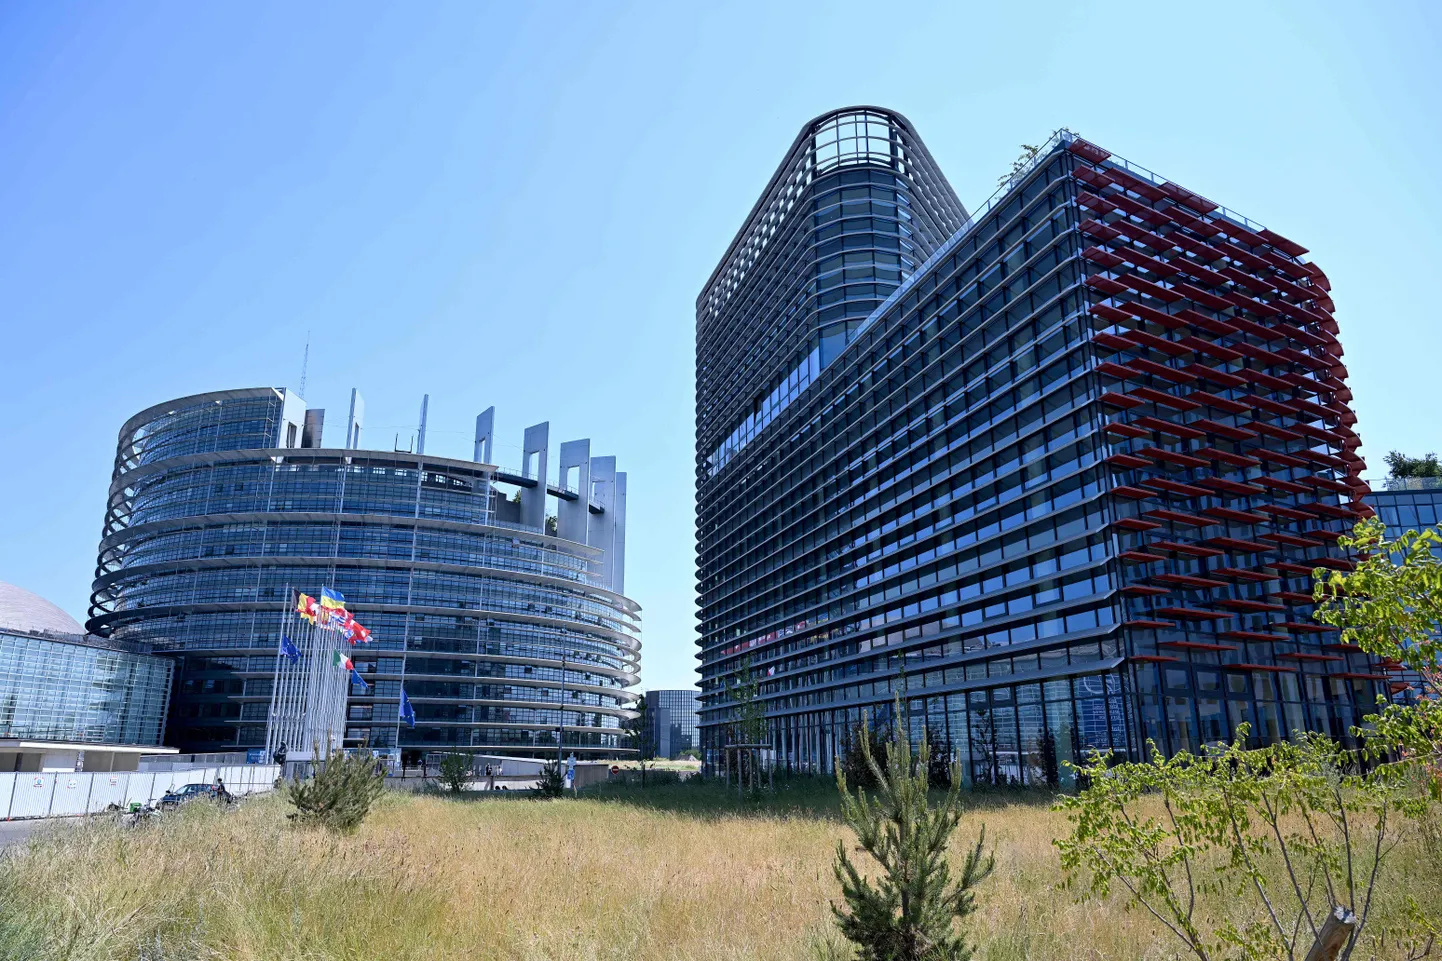 Osmose’i hoone (paremal) asub Strasbourgis kohe europarlamendi maja kõrval.